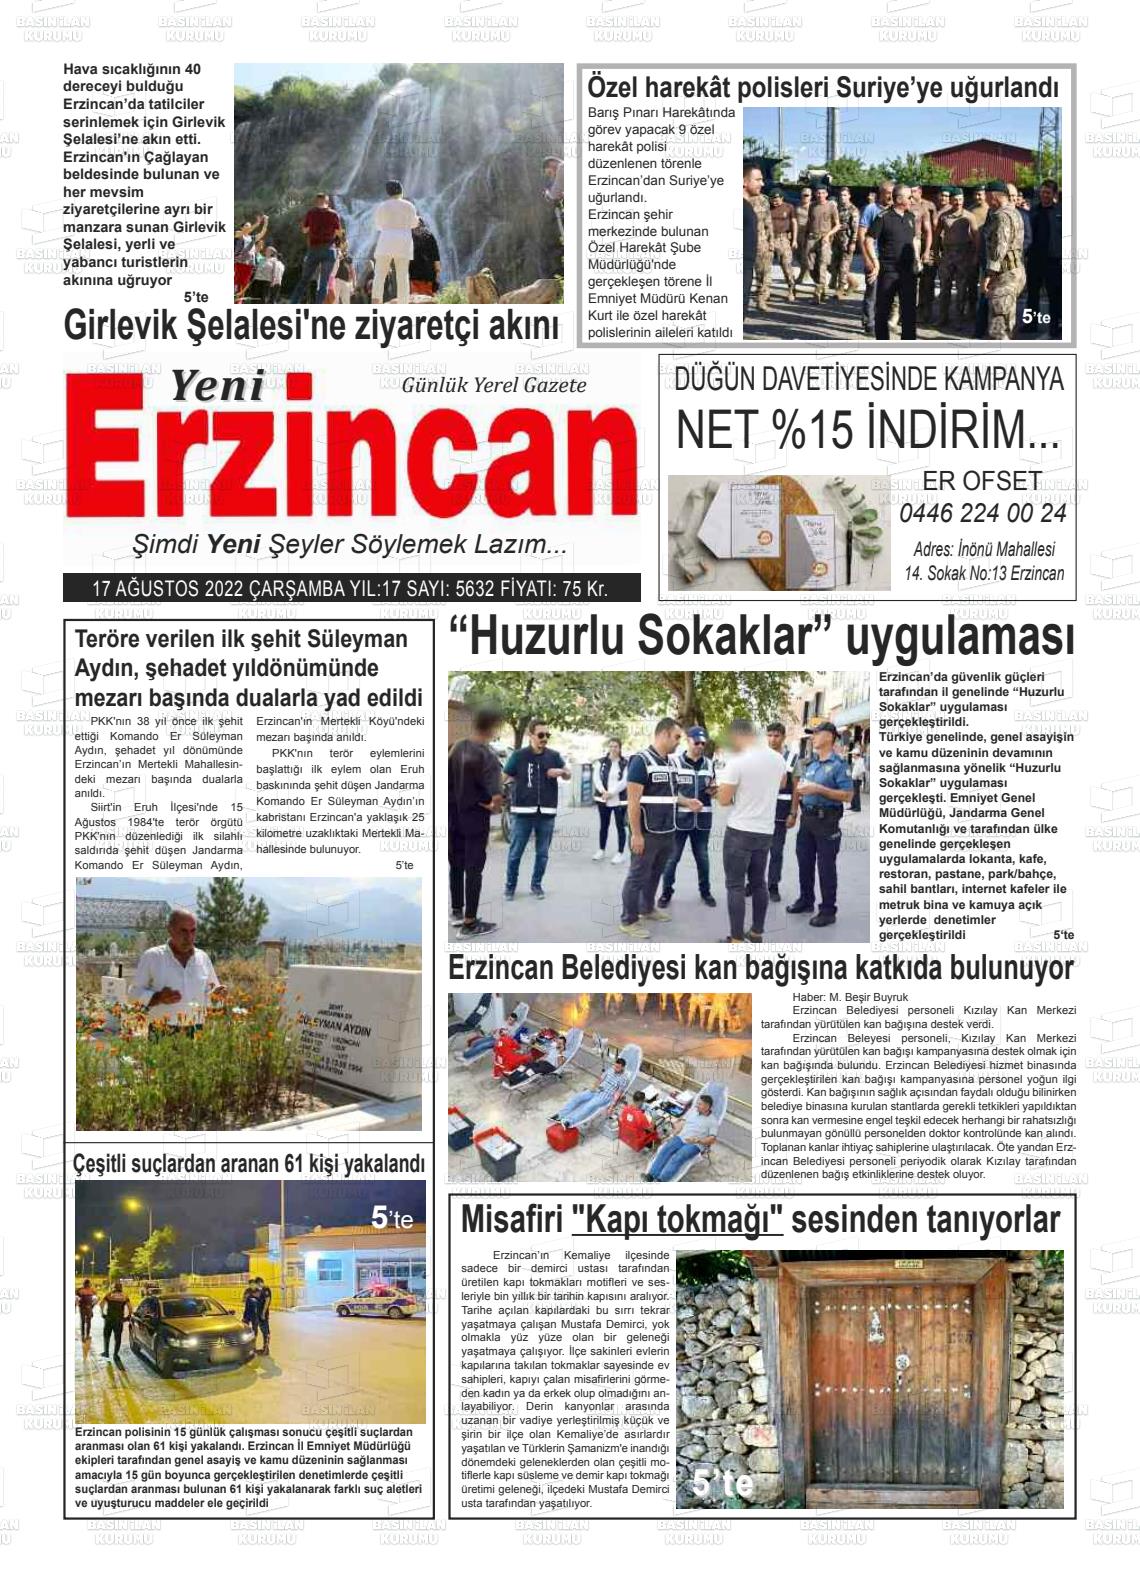 17 Ağustos 2022 Yeni Erzincan Gazete Manşeti